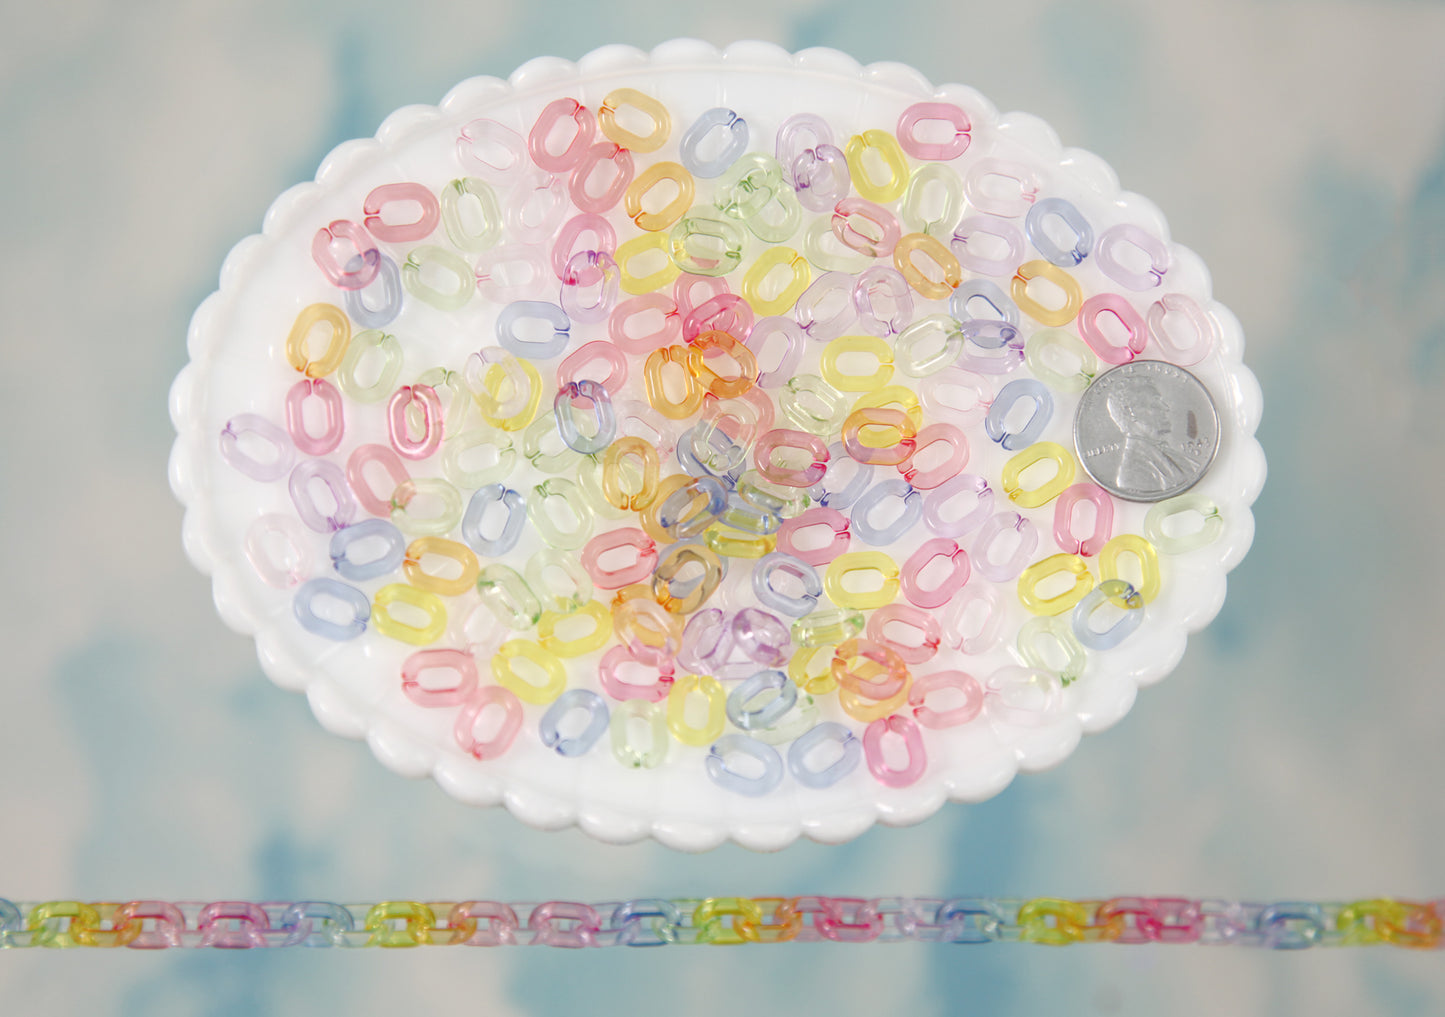 Tiny Plastic Chain Links - 10mm Mini Transparent Colorful Plastic or Acrylic Chain Links - Mixed Colors - 200 pc